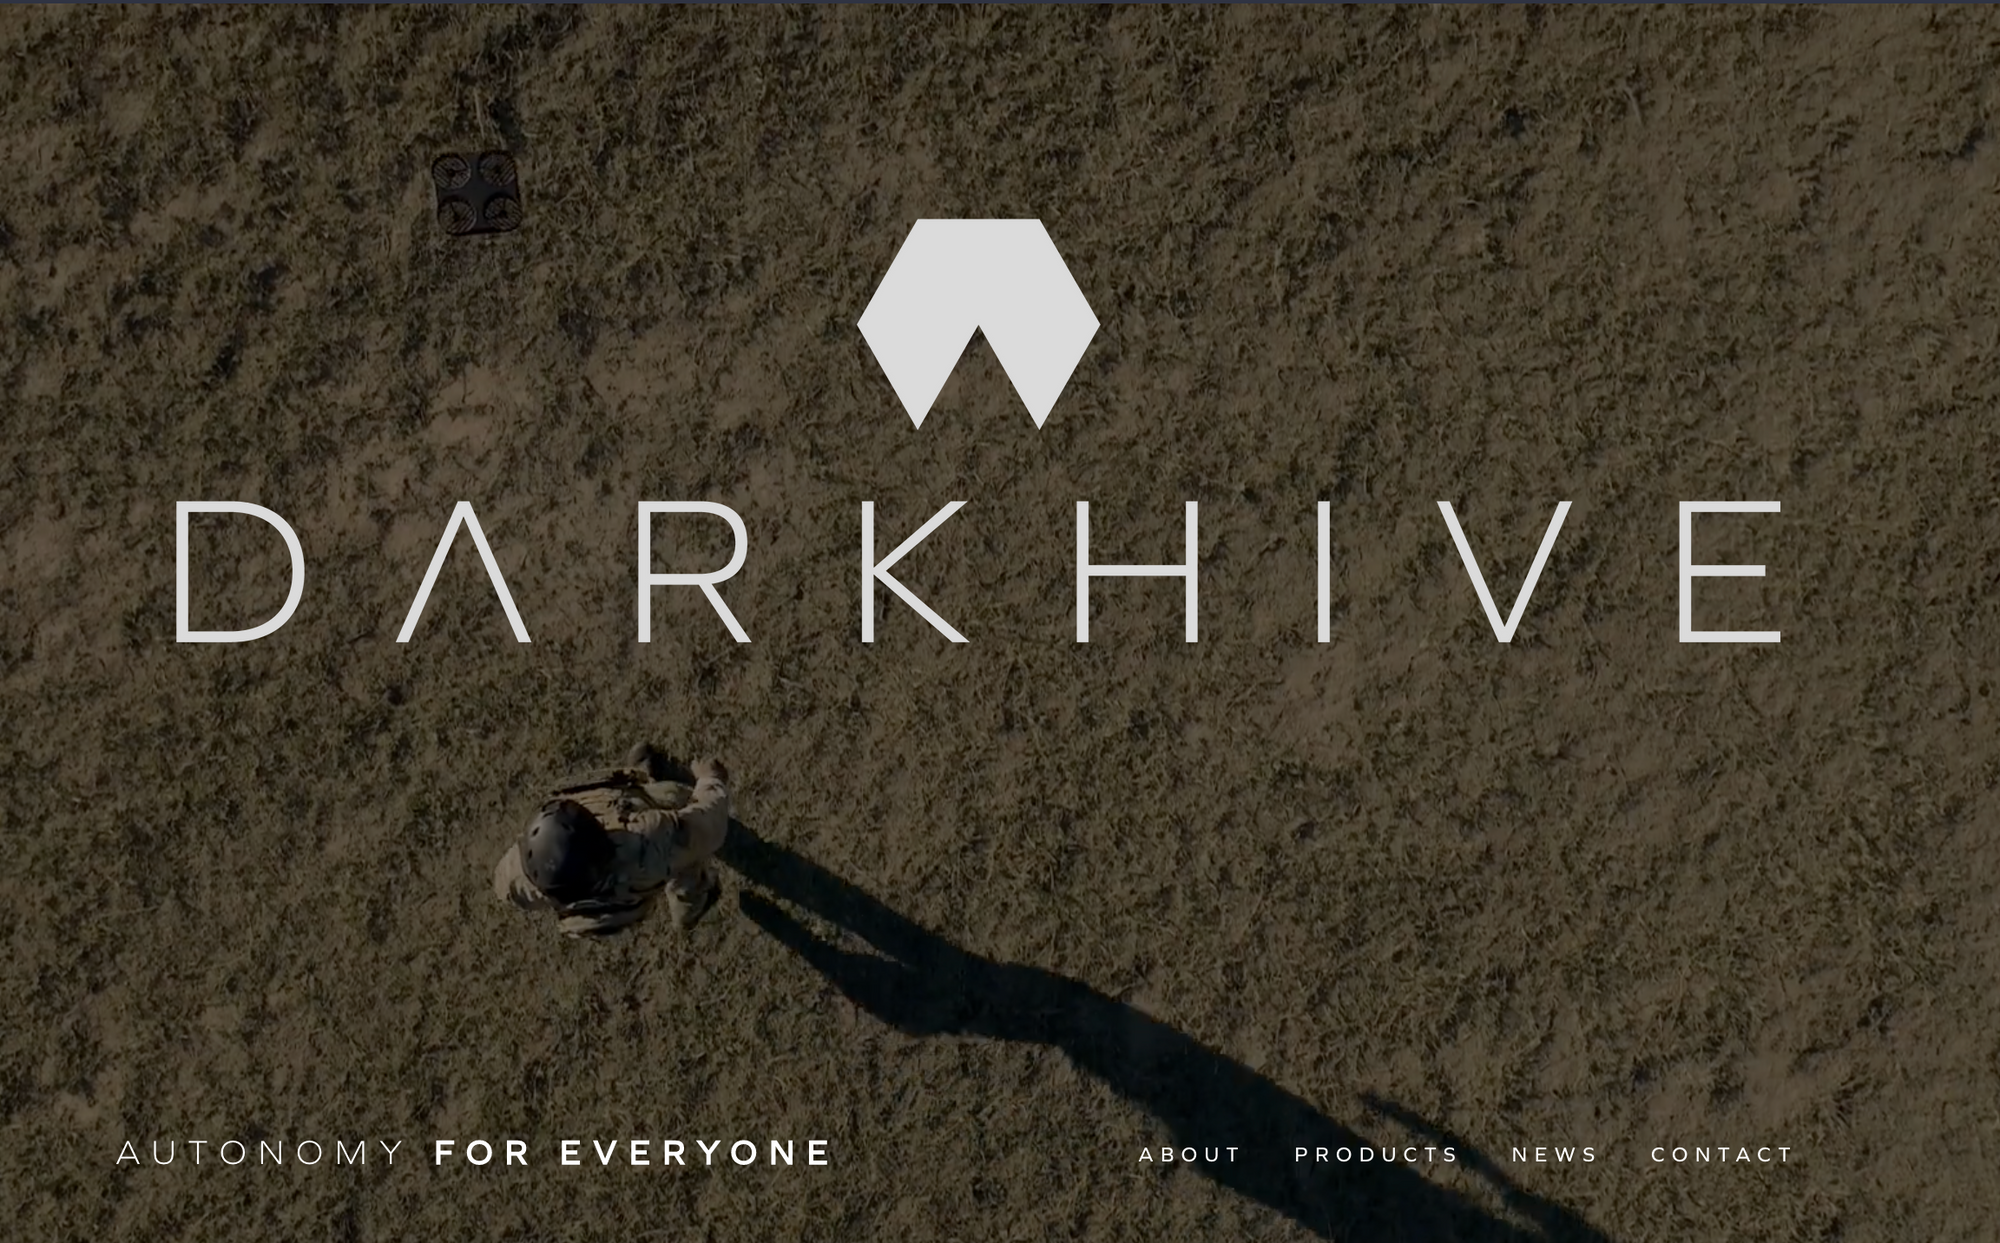 Website of Darkhive.AI